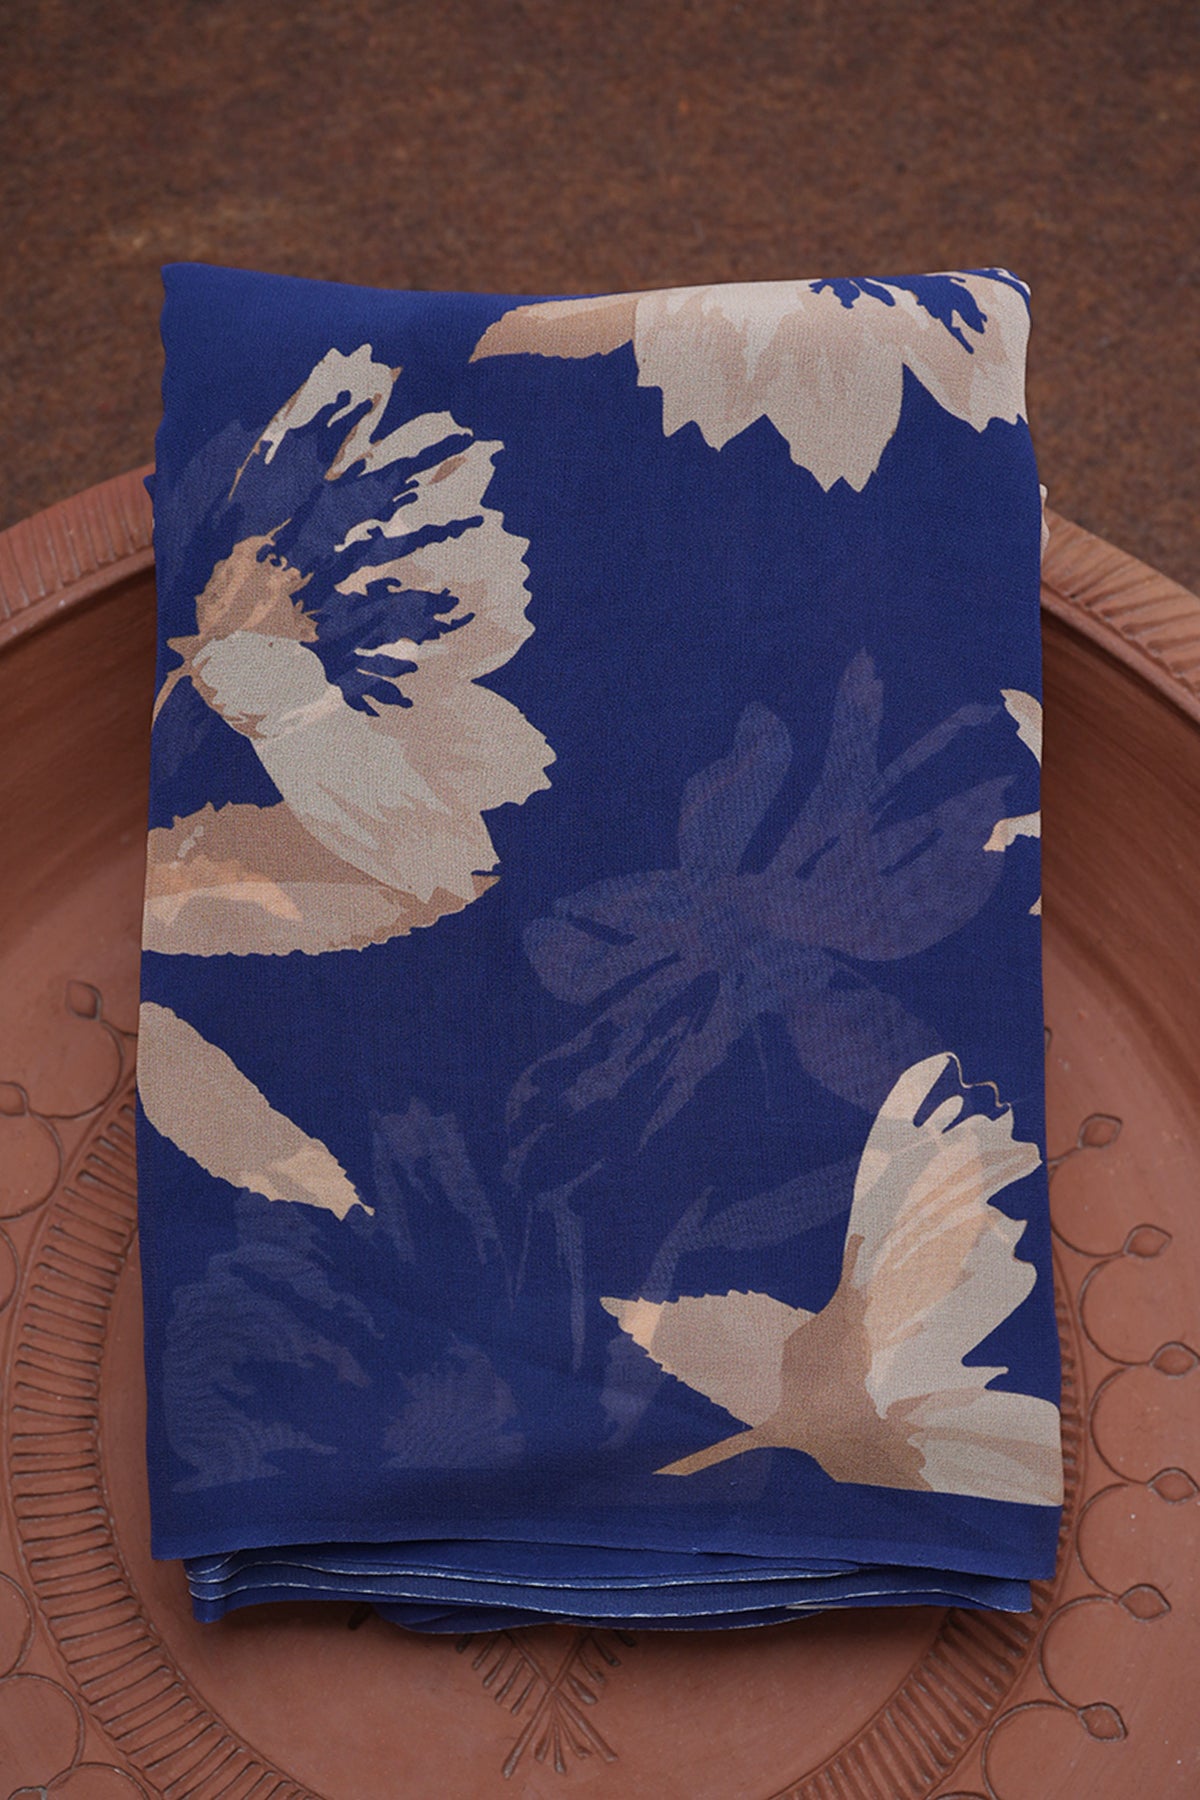 Allover Floral Printed Design Navy Blue Georgette Saree